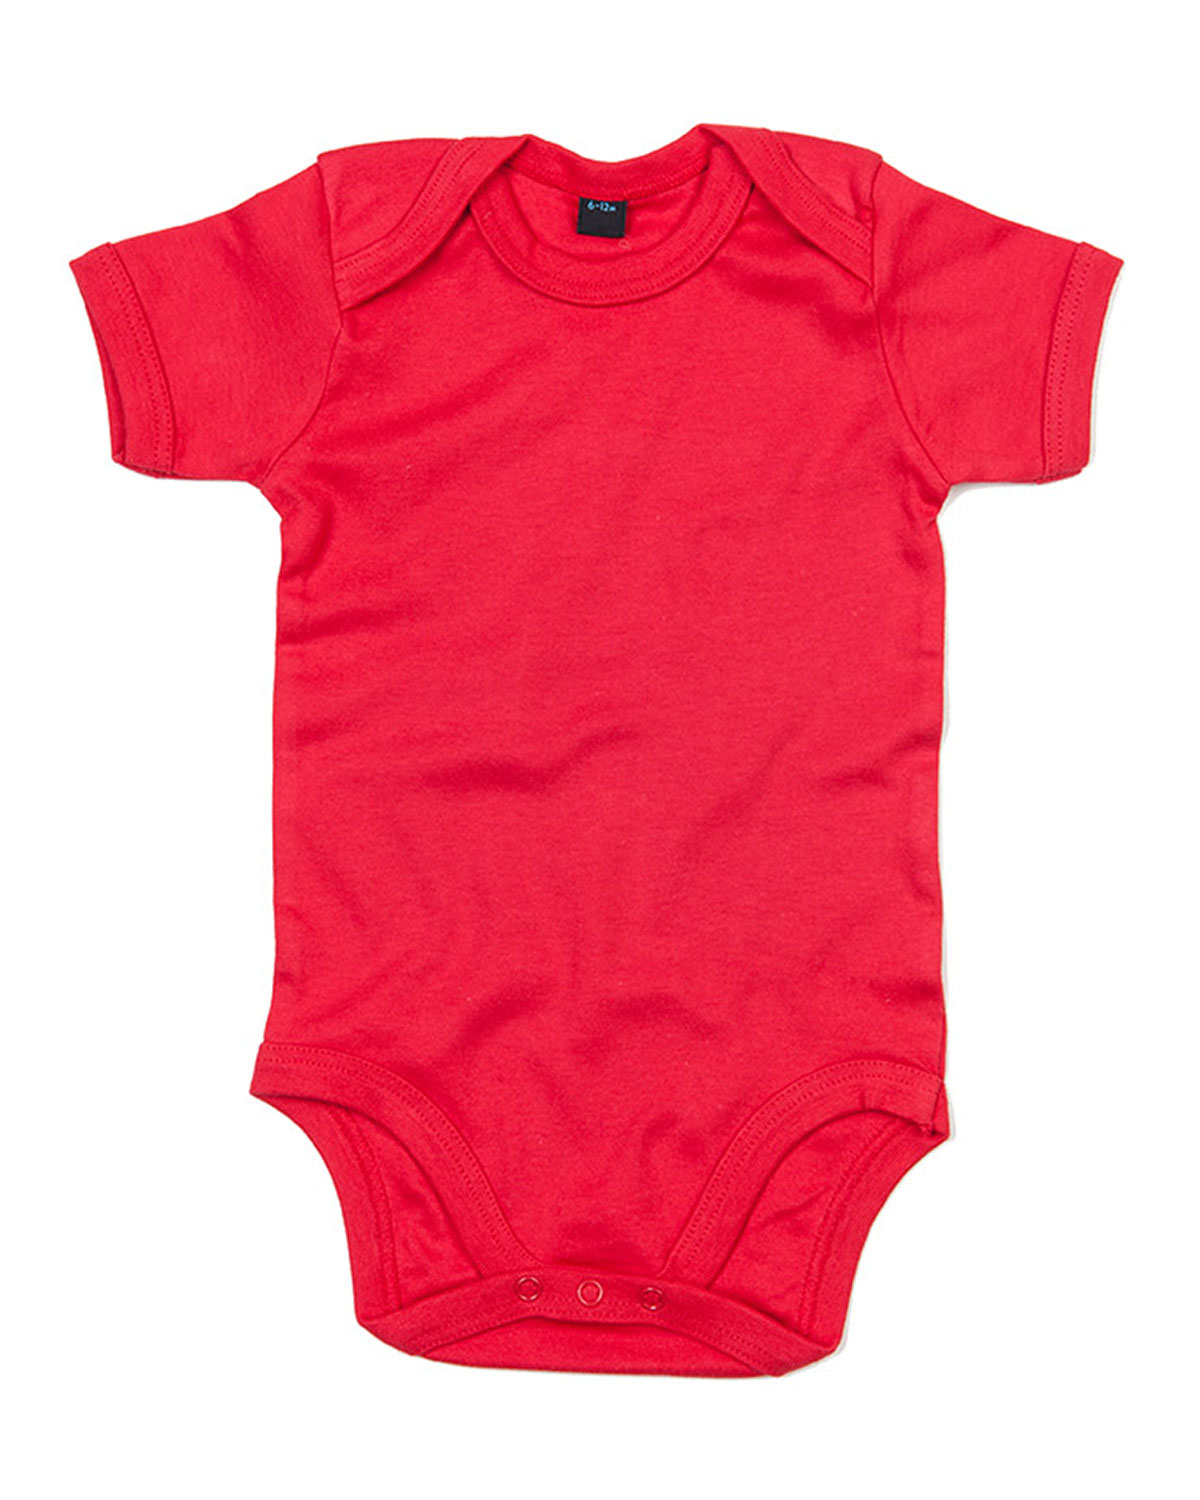 Baby Strampler Bodysuit Red 86